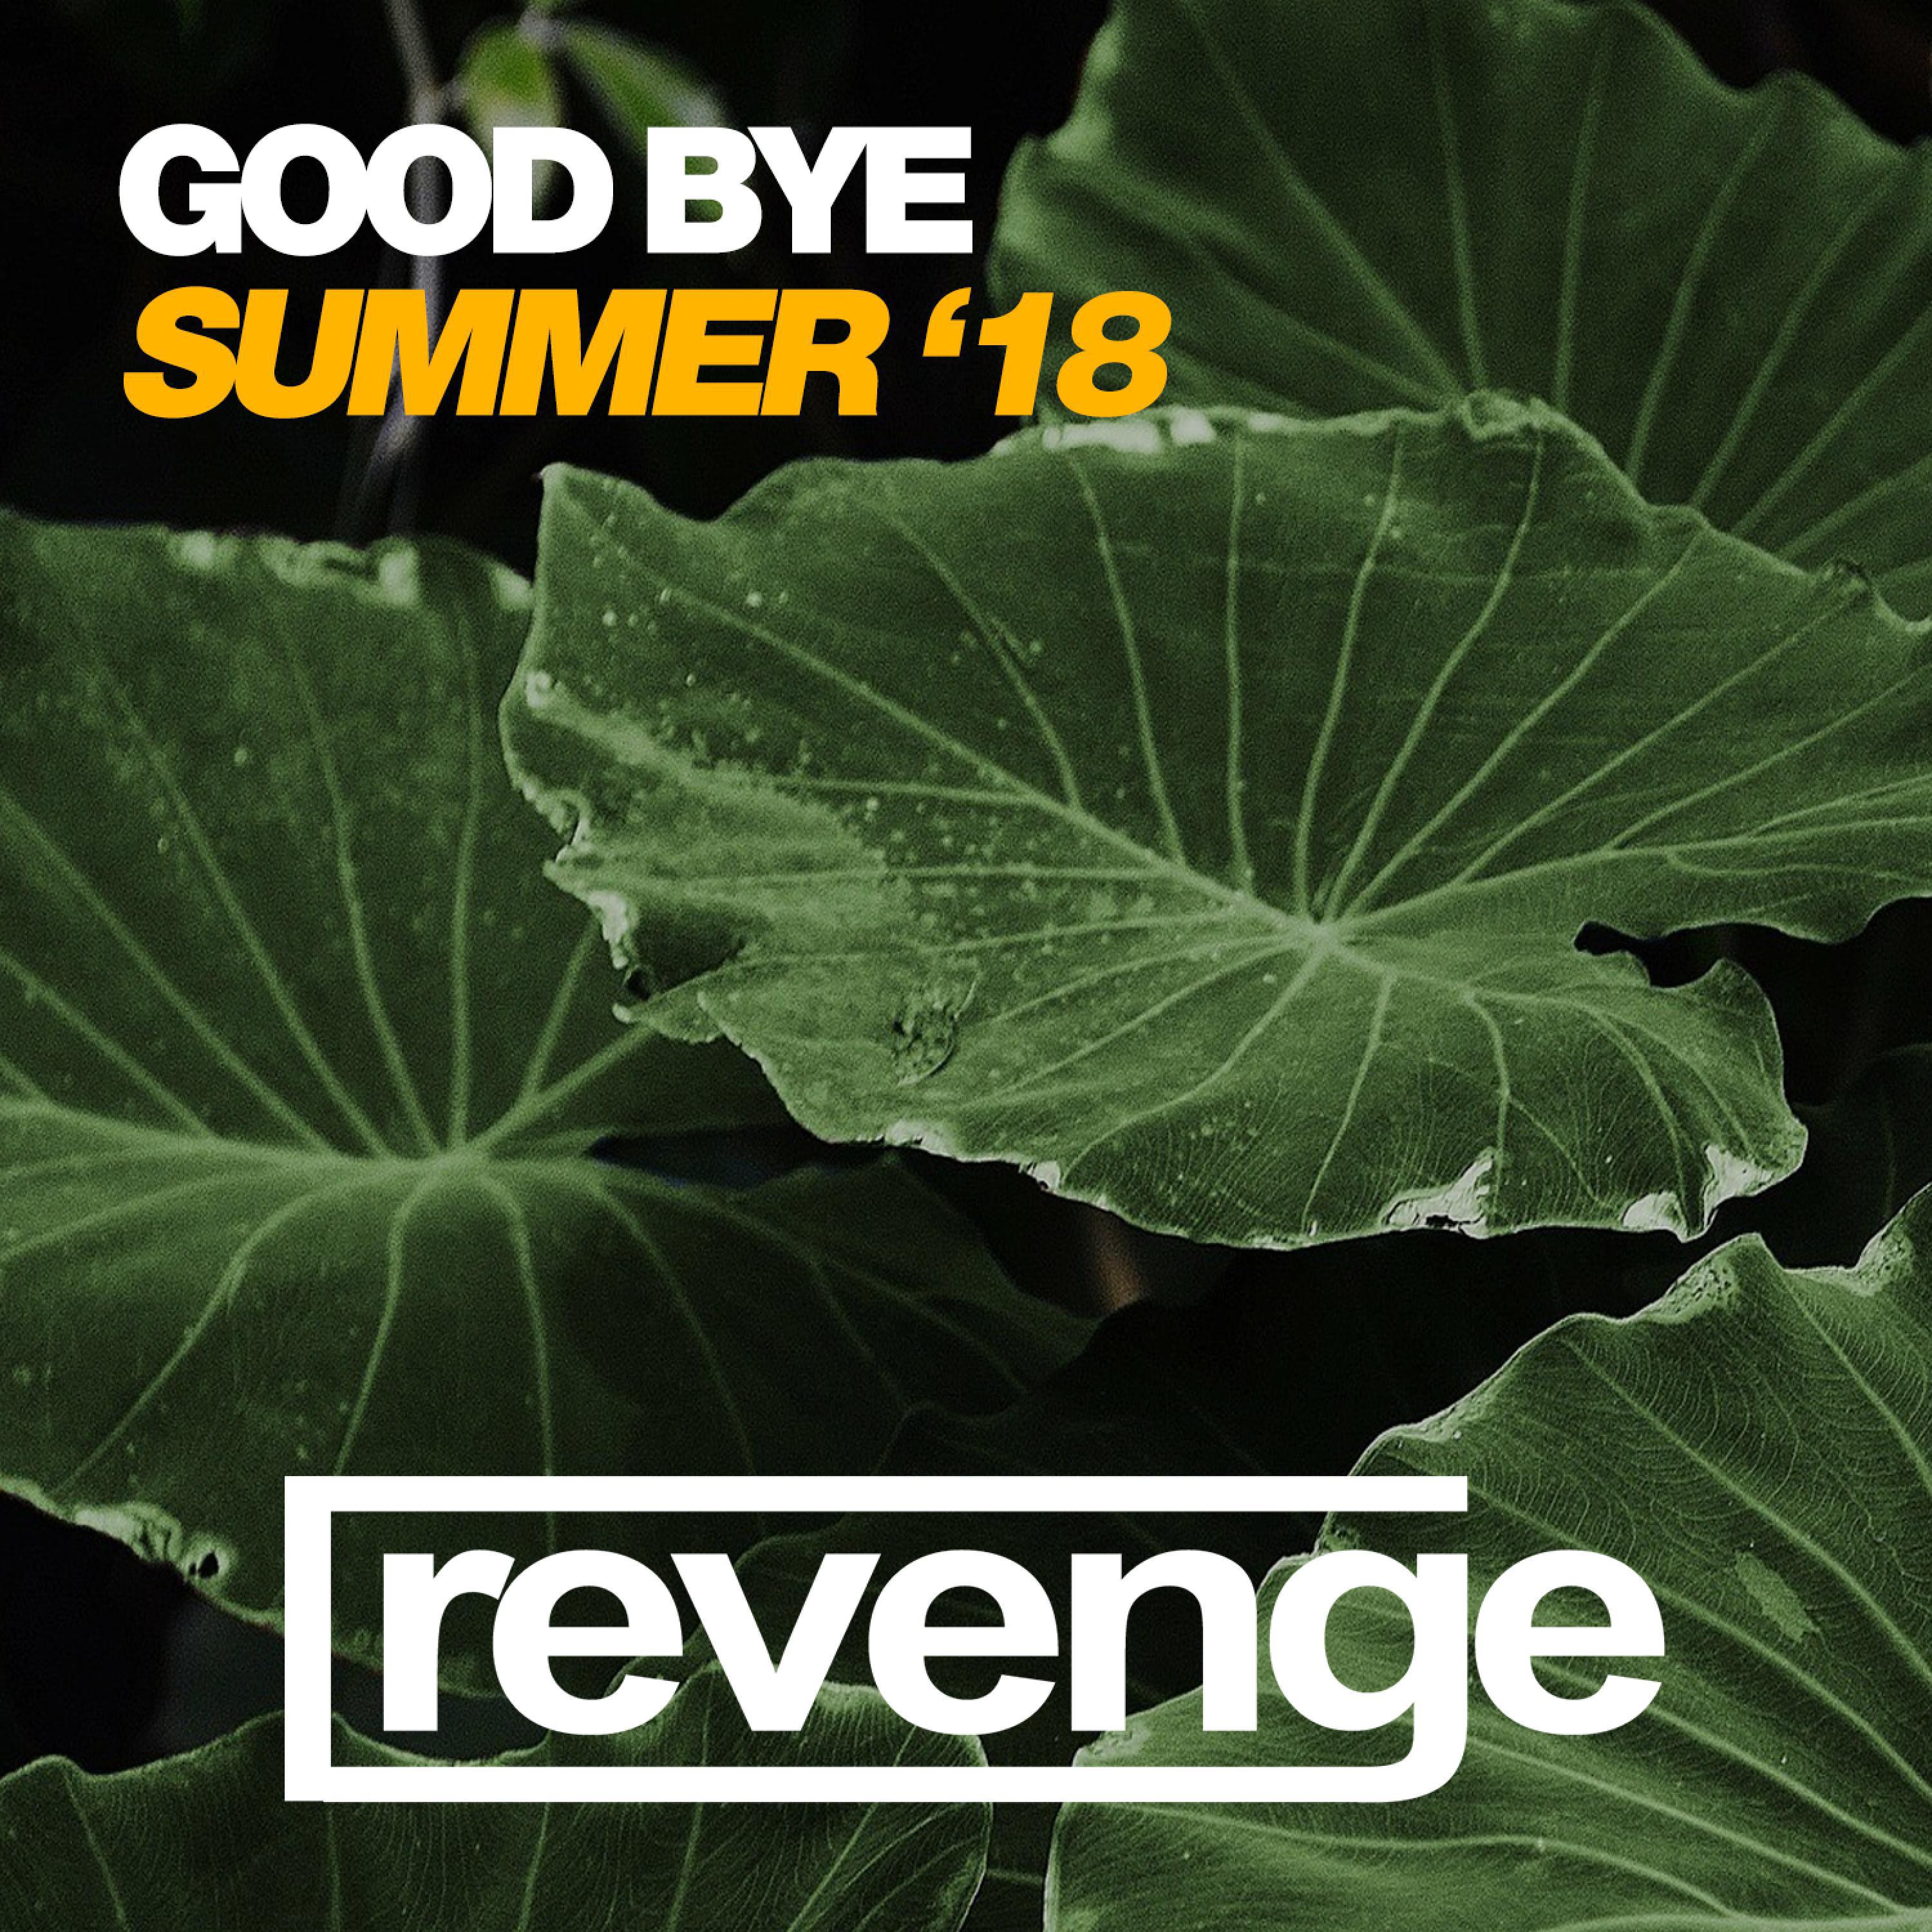 Good Bye Summer '18